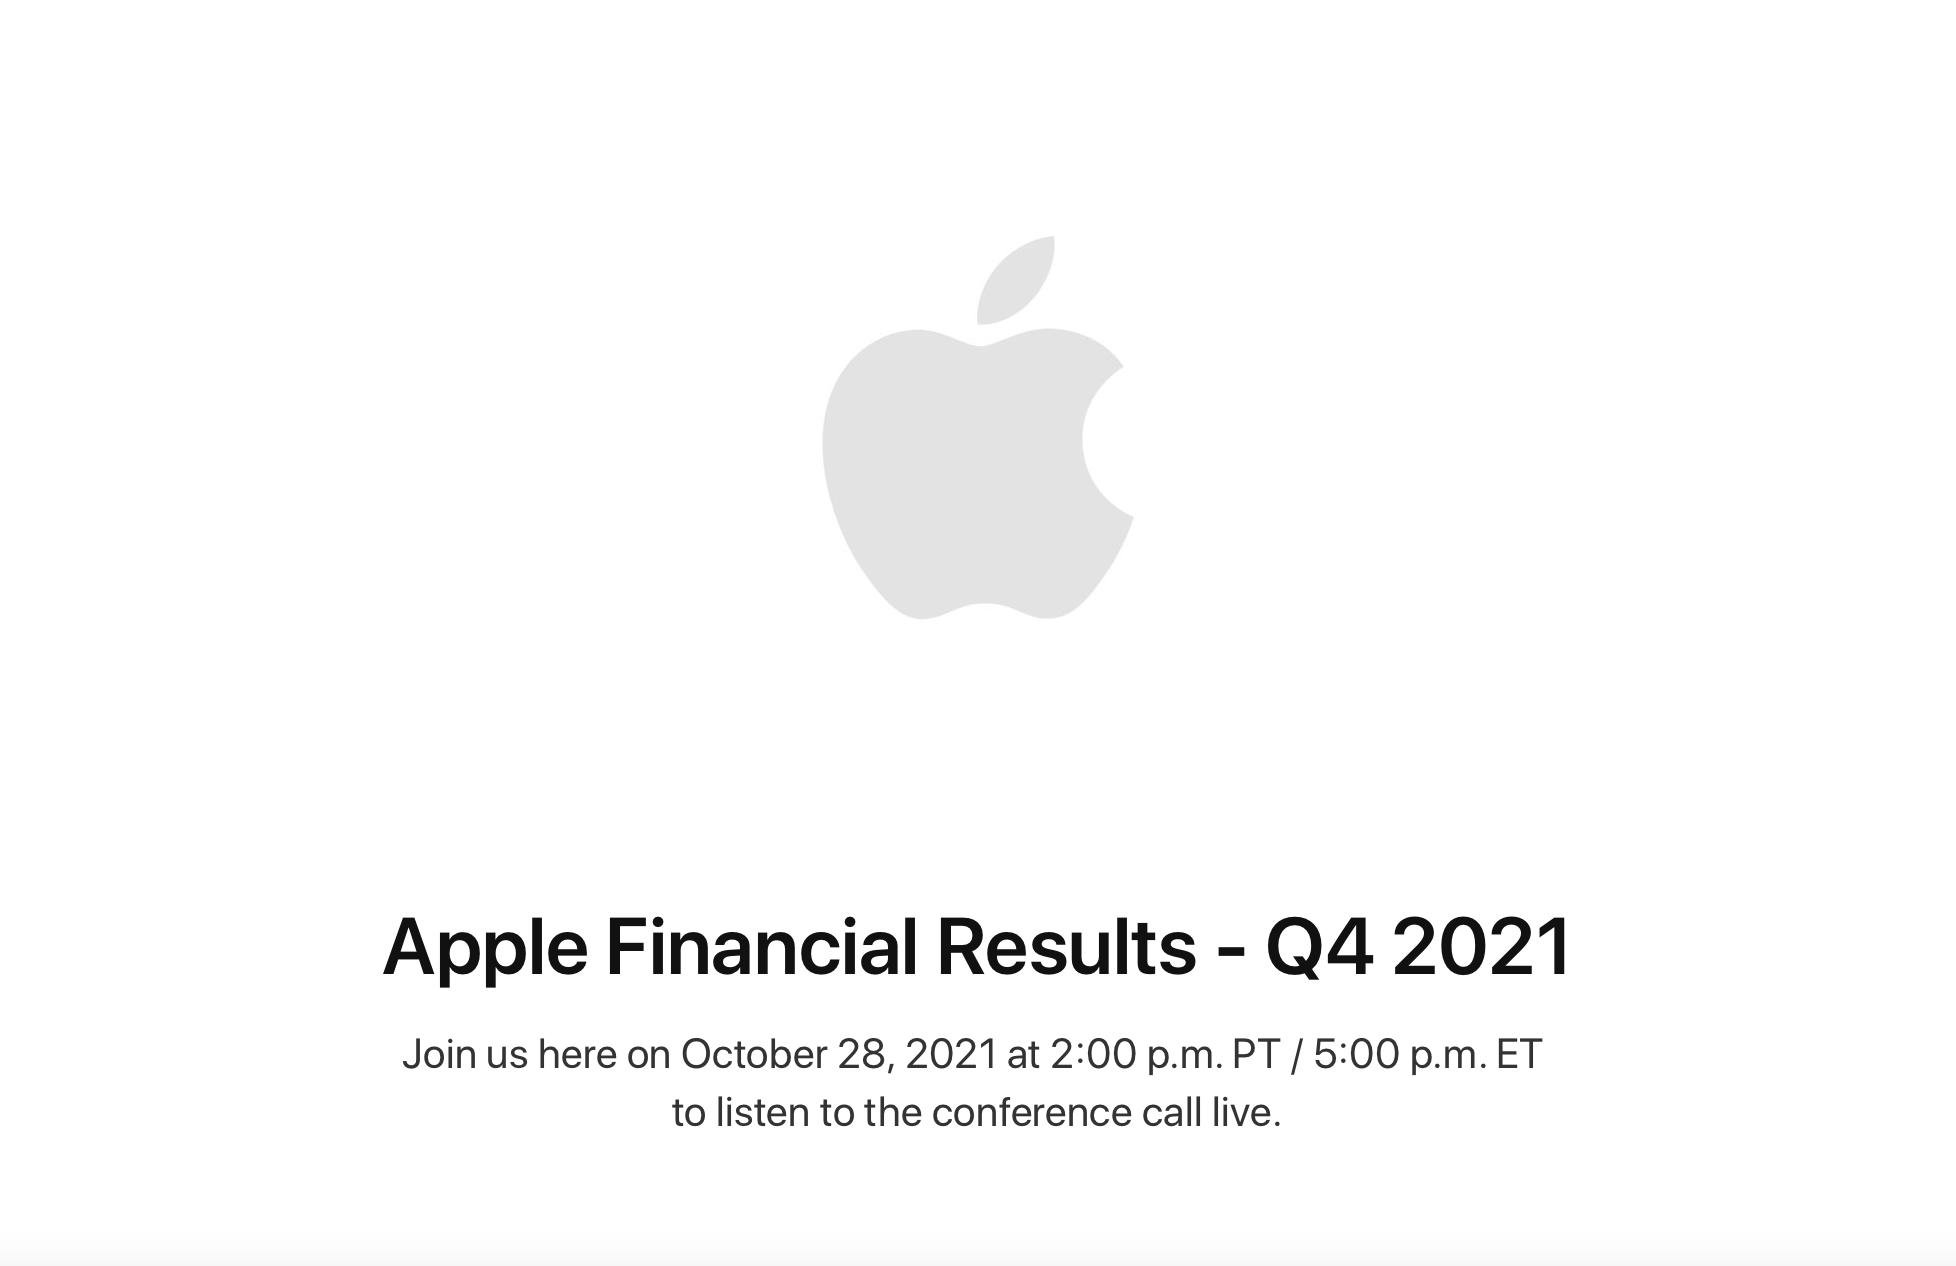 How to listen to Apple's Q4 2021 earnings call on Thursday, October 28